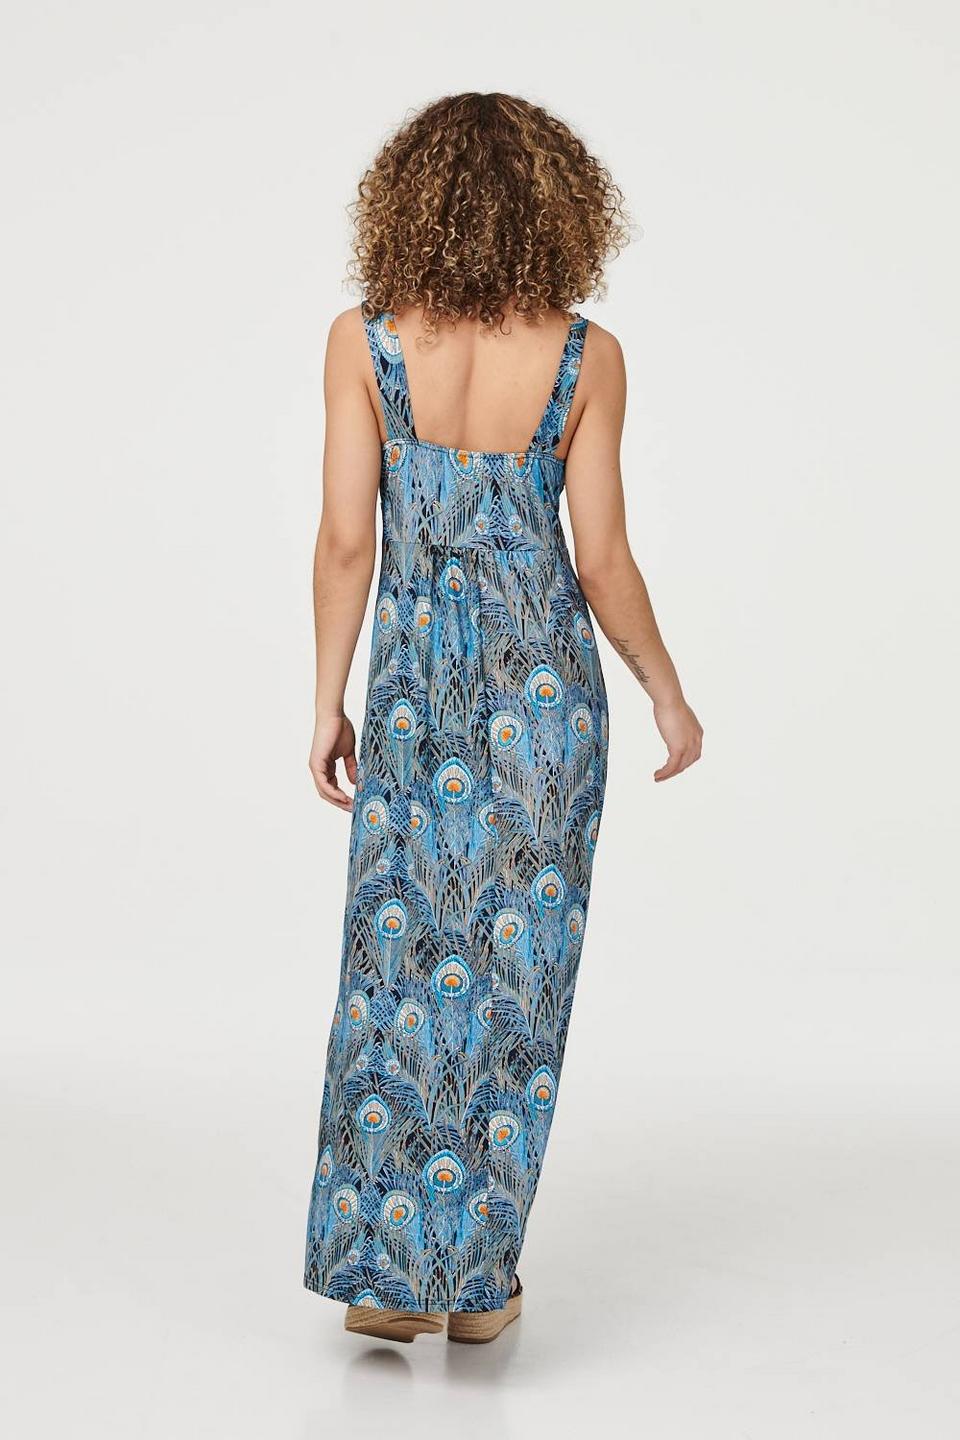 Dresses | Peacock Print A-Line Maxi Dress | Izabel London